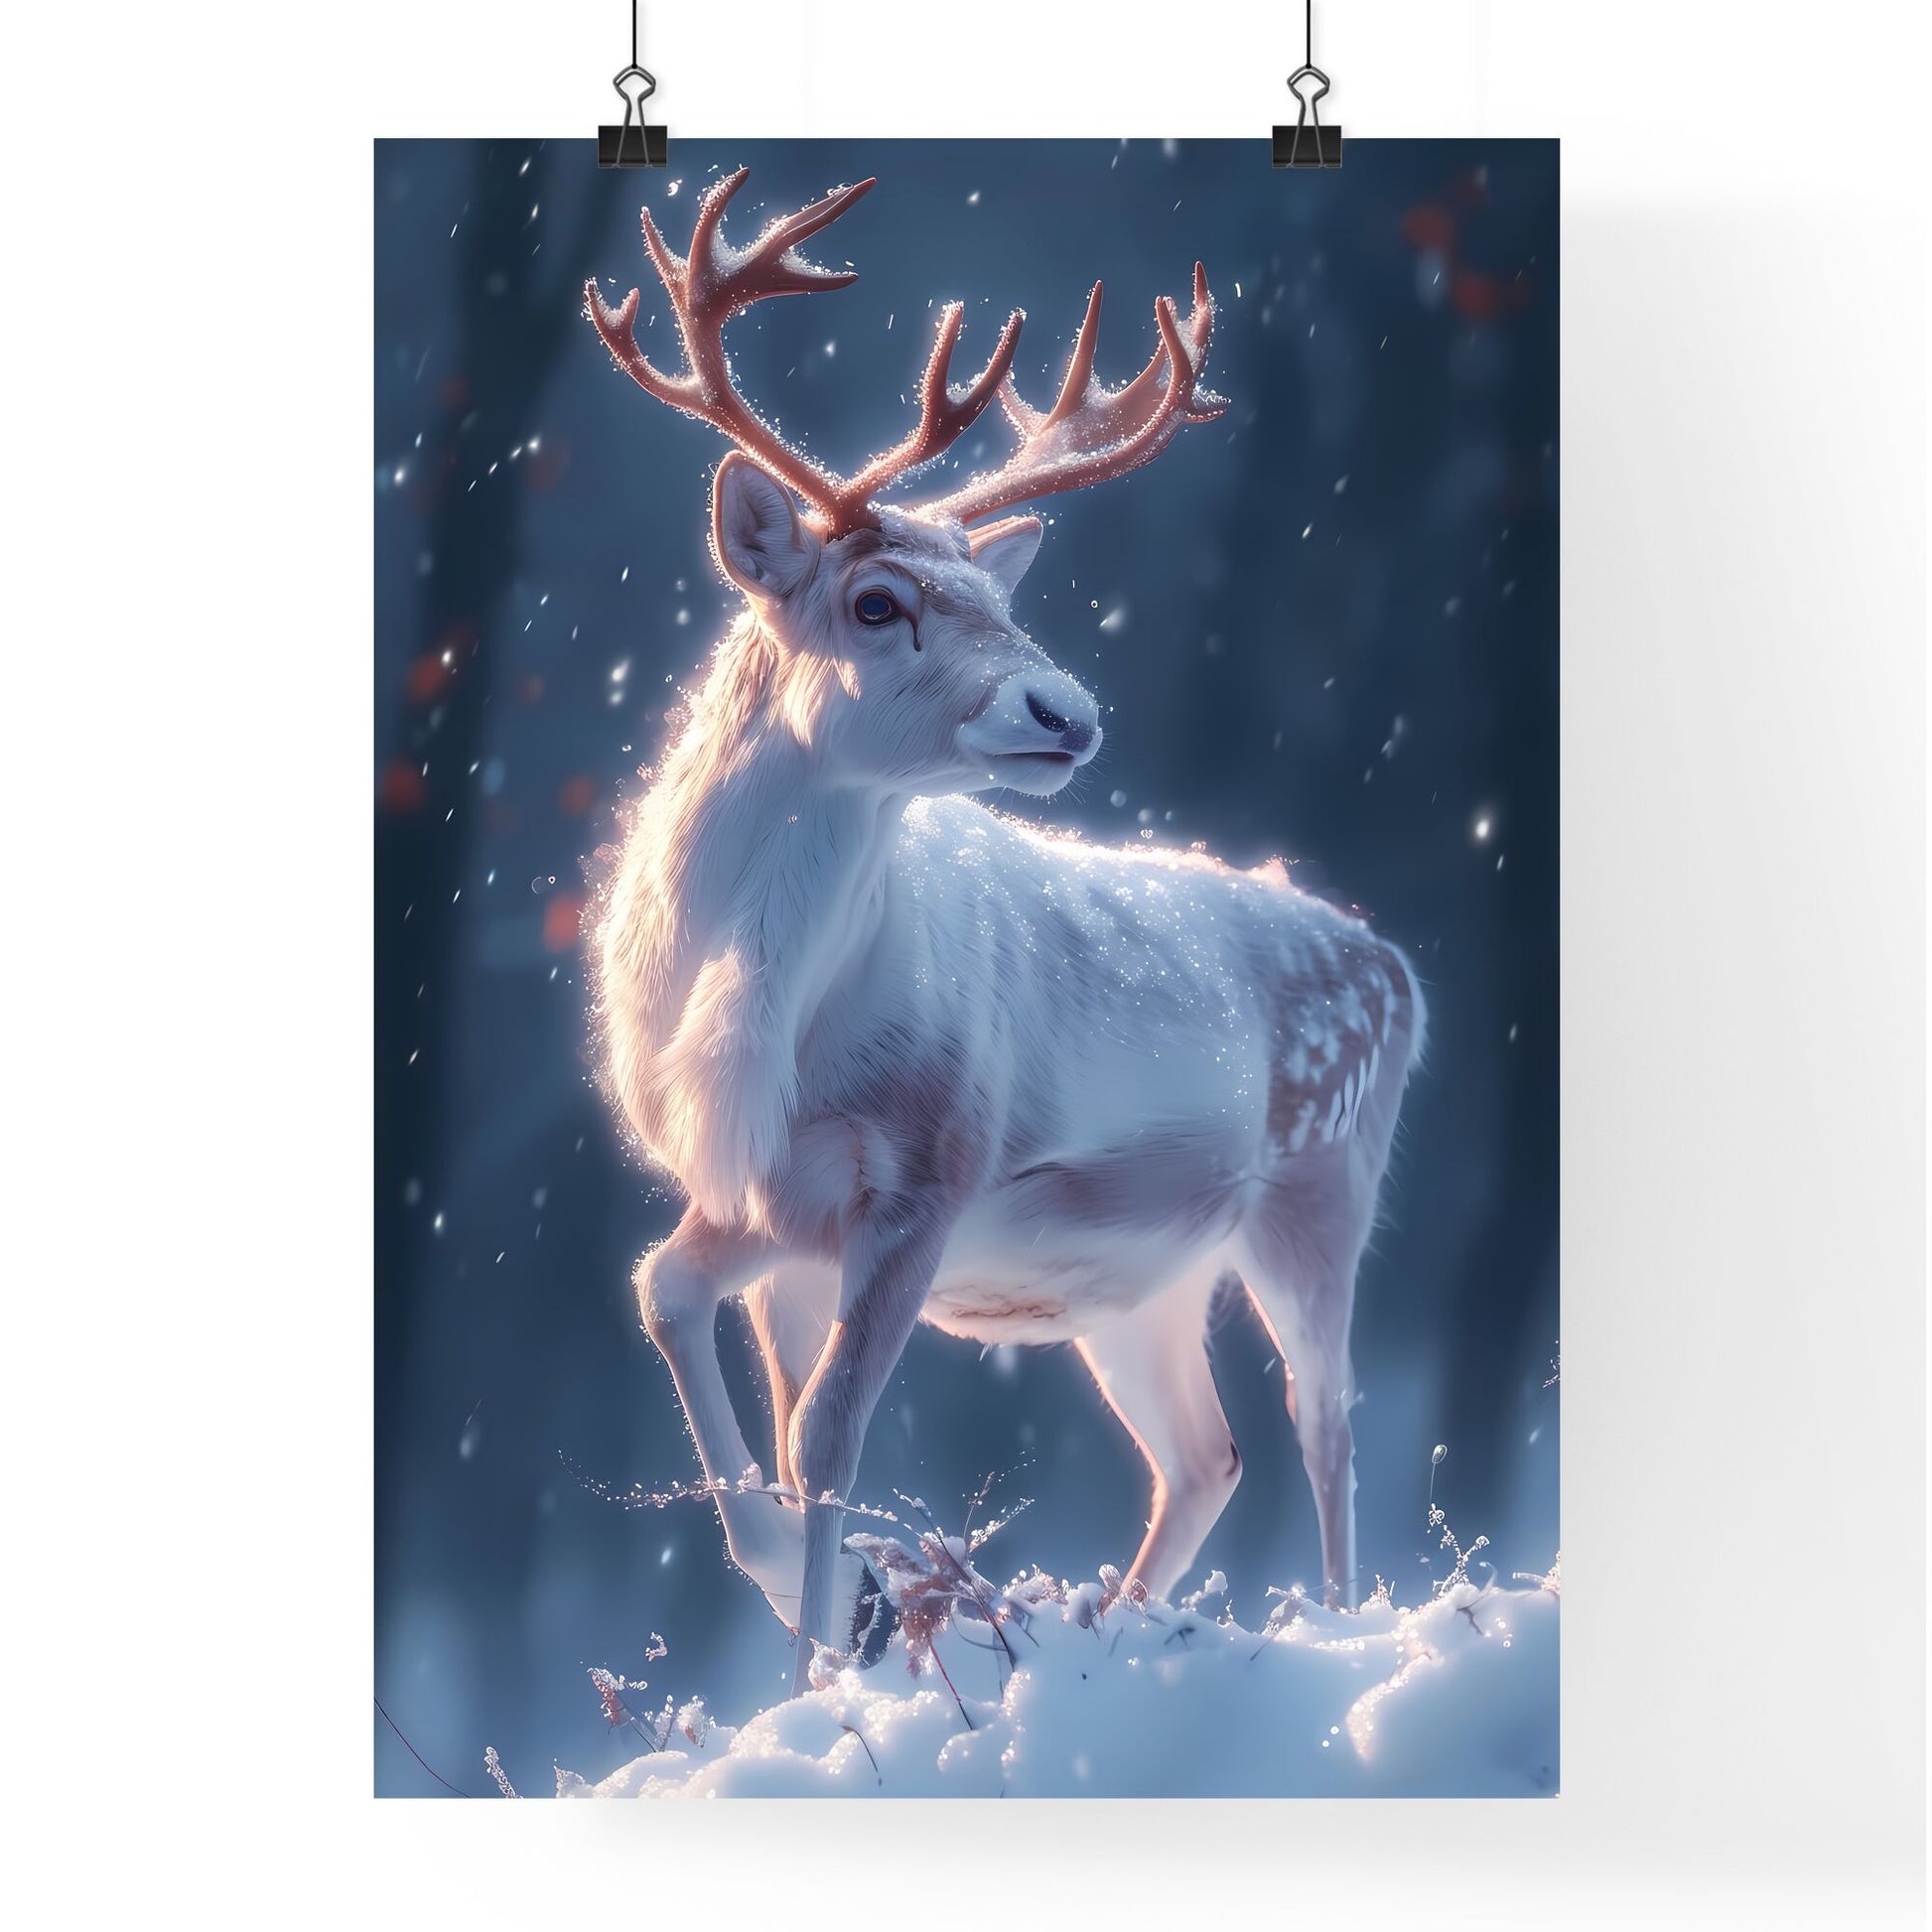 Winter wildlife wallpaper - Art print of a deer with antlers standing in snow Default Title